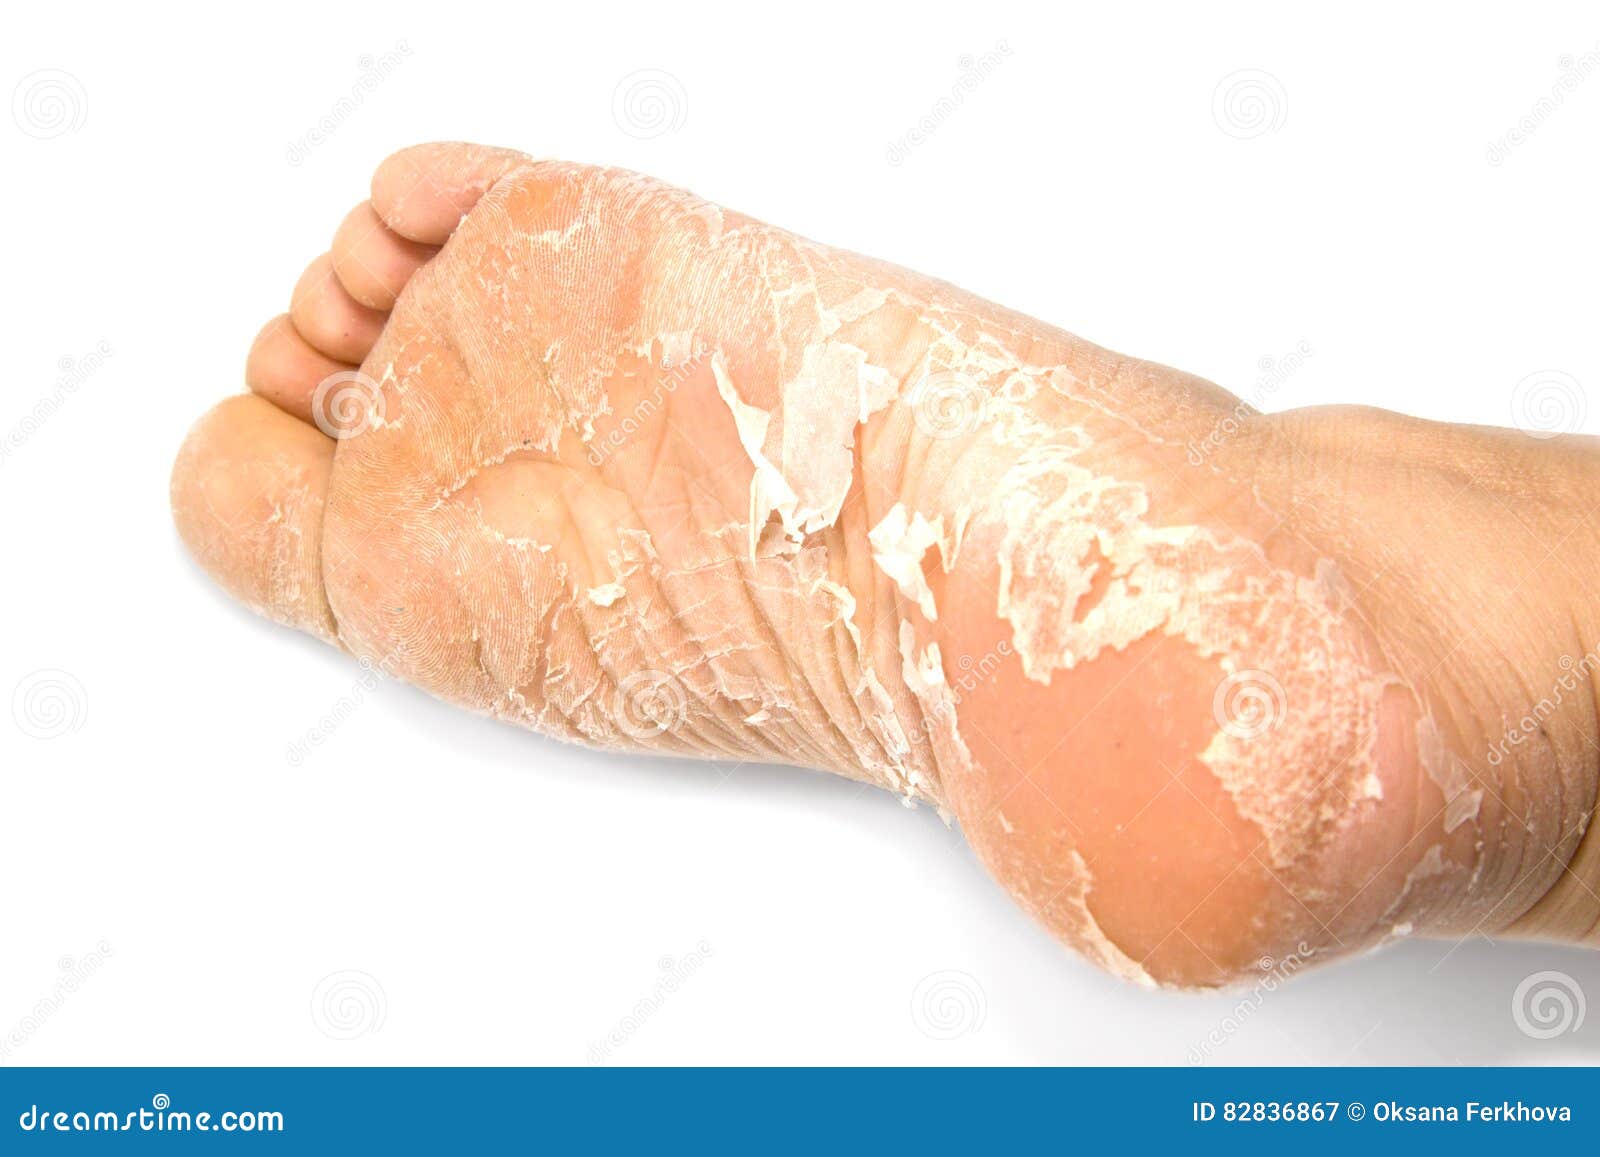 cracked skin on heels of feet